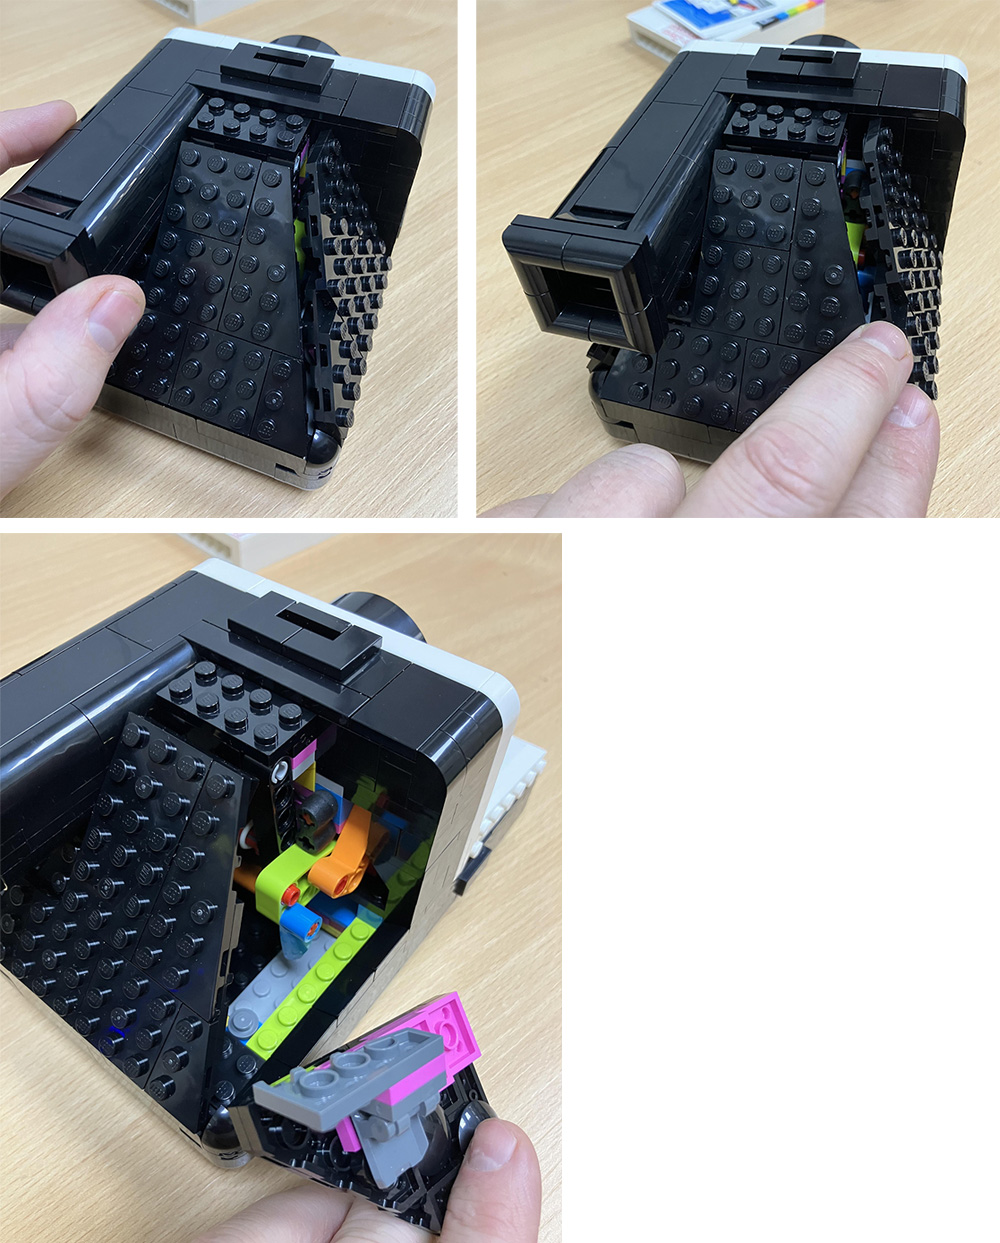 LEGO Polaroid OneStep SX-70